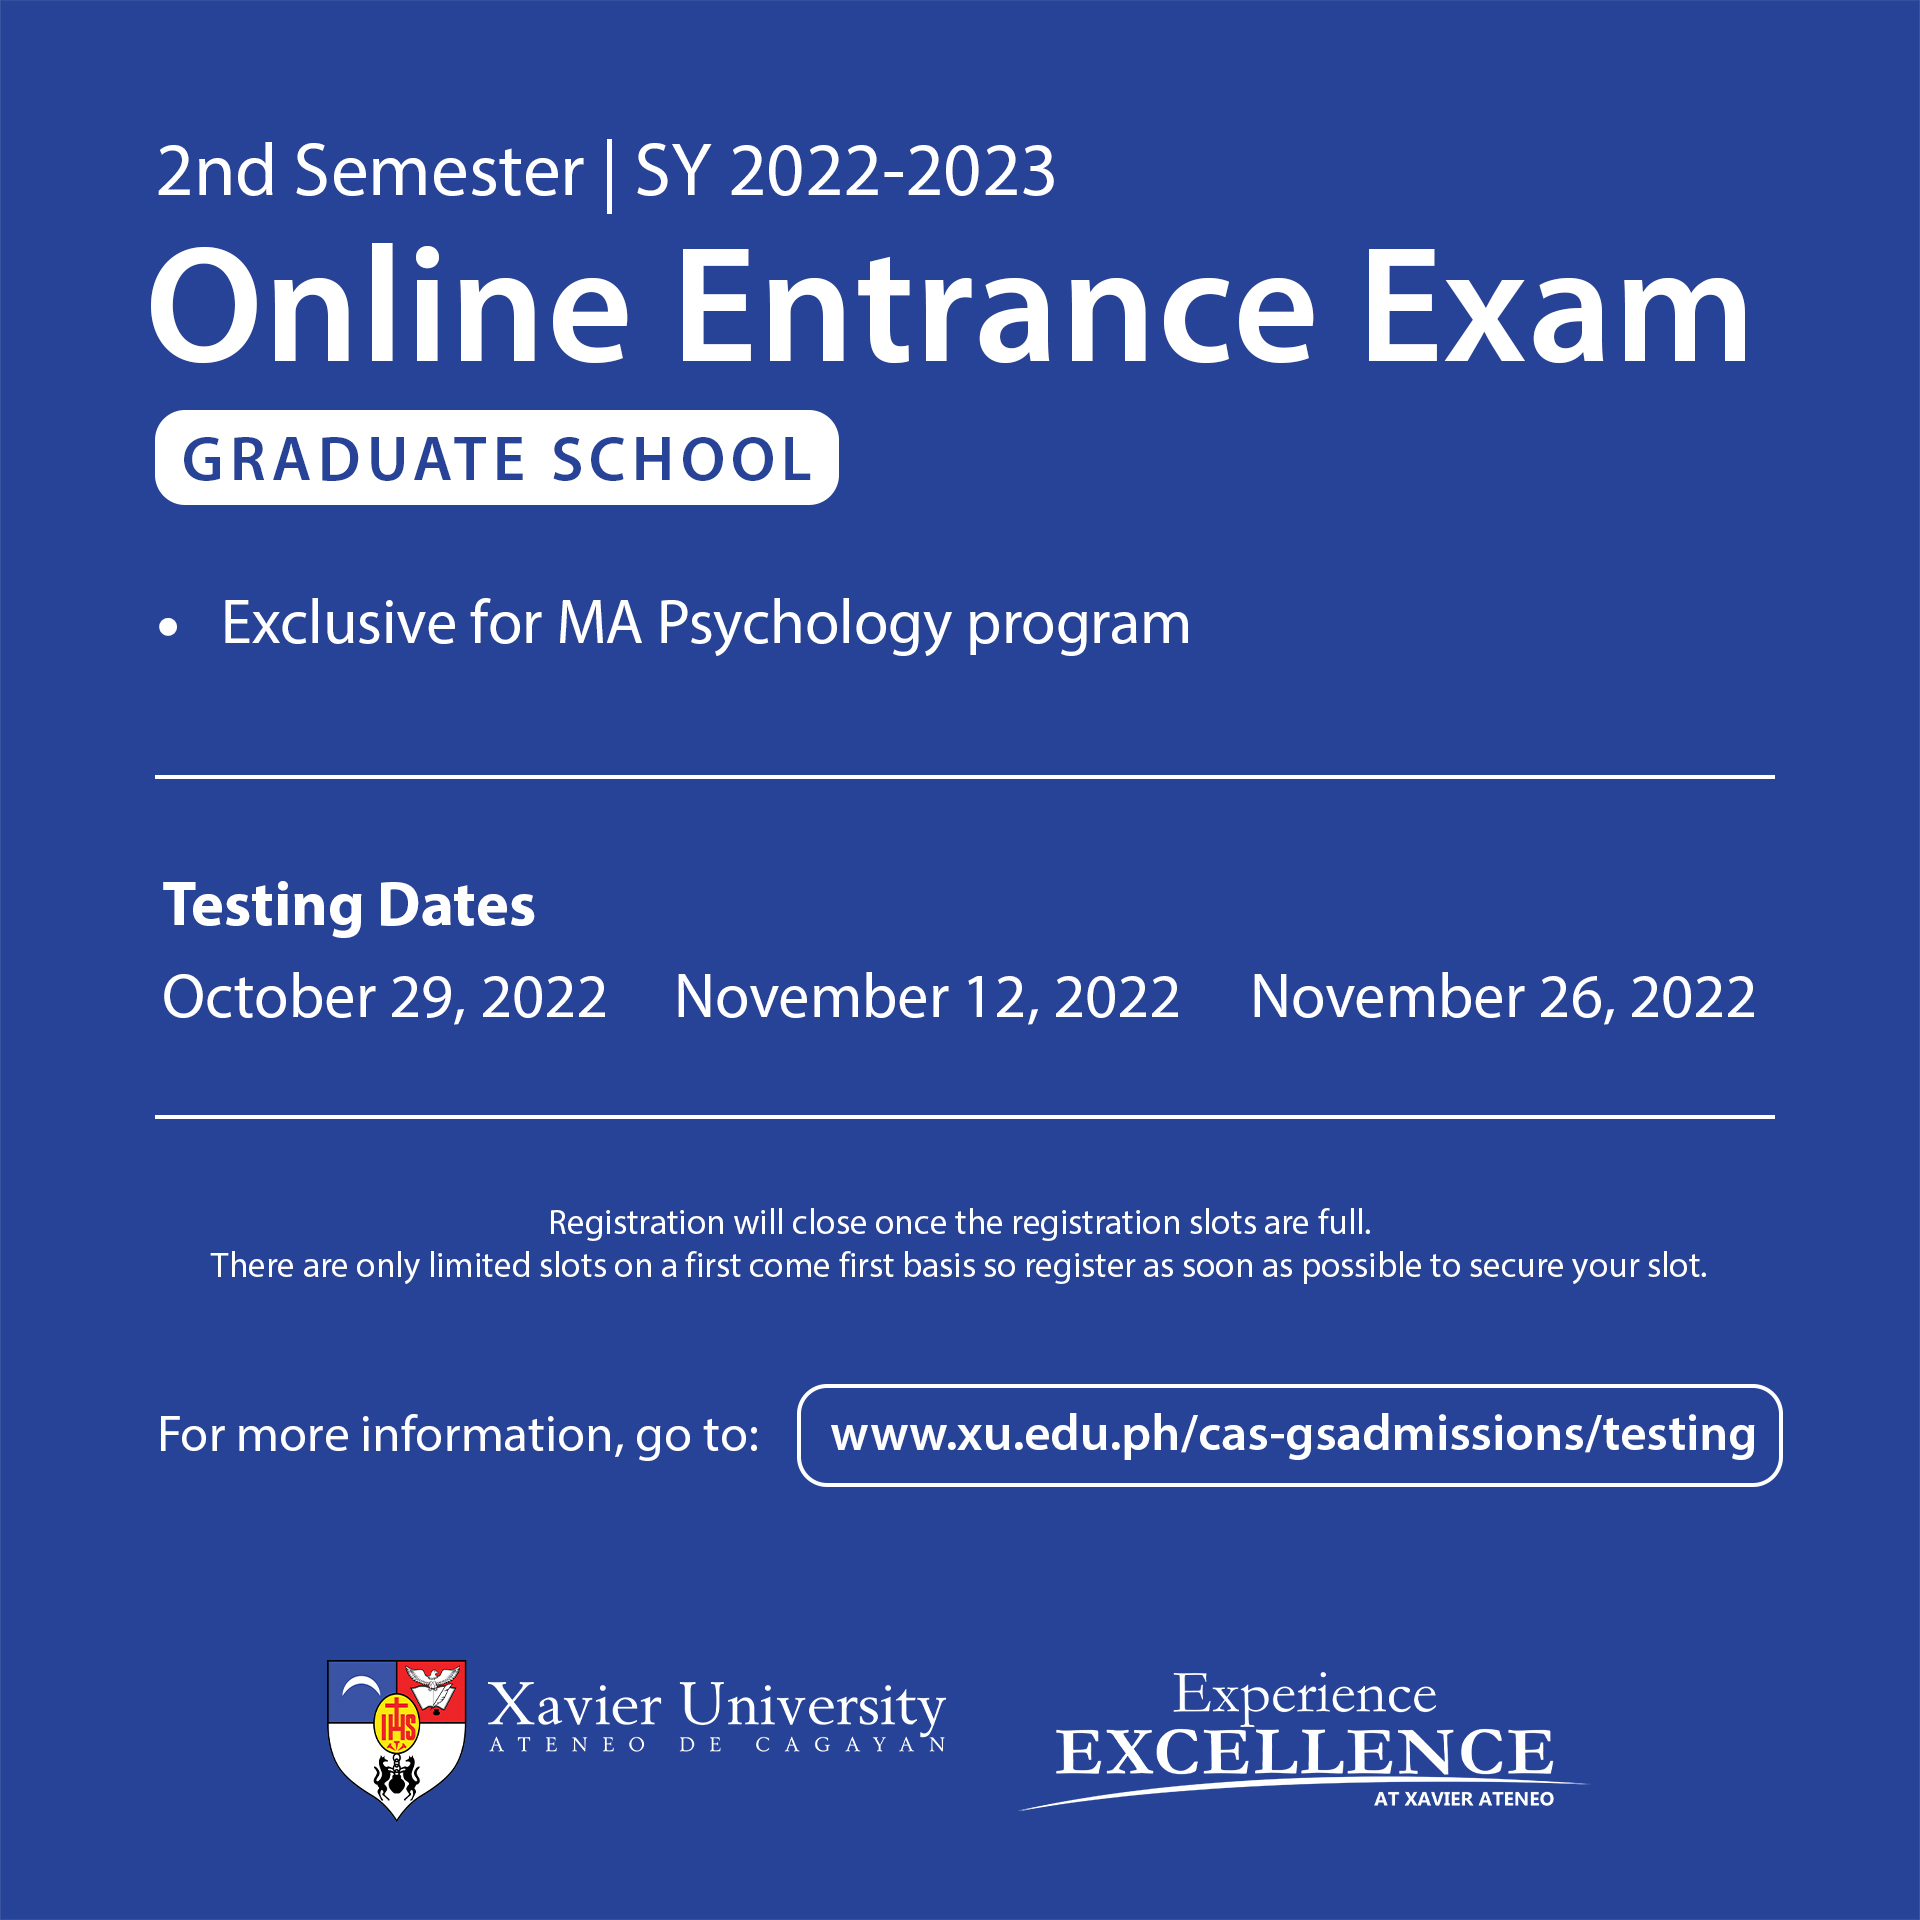 Online Entrance Exam Graduate School